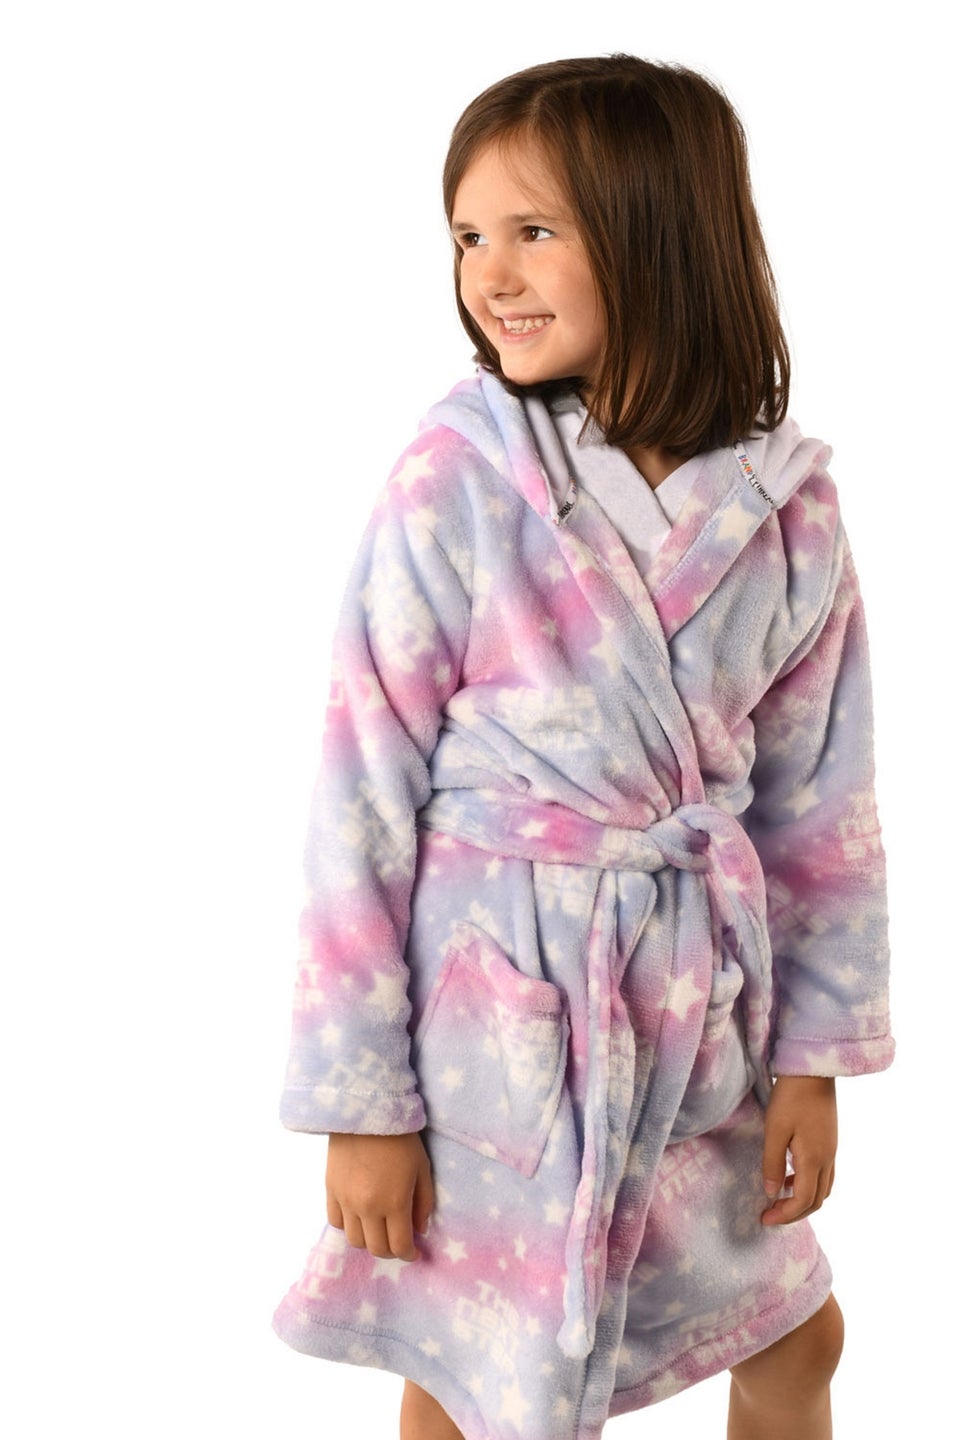 Girls Unicorn Dressing Gown, Grey Rainbow Star, Hood, Age 11-12, Great  Condition | eBay